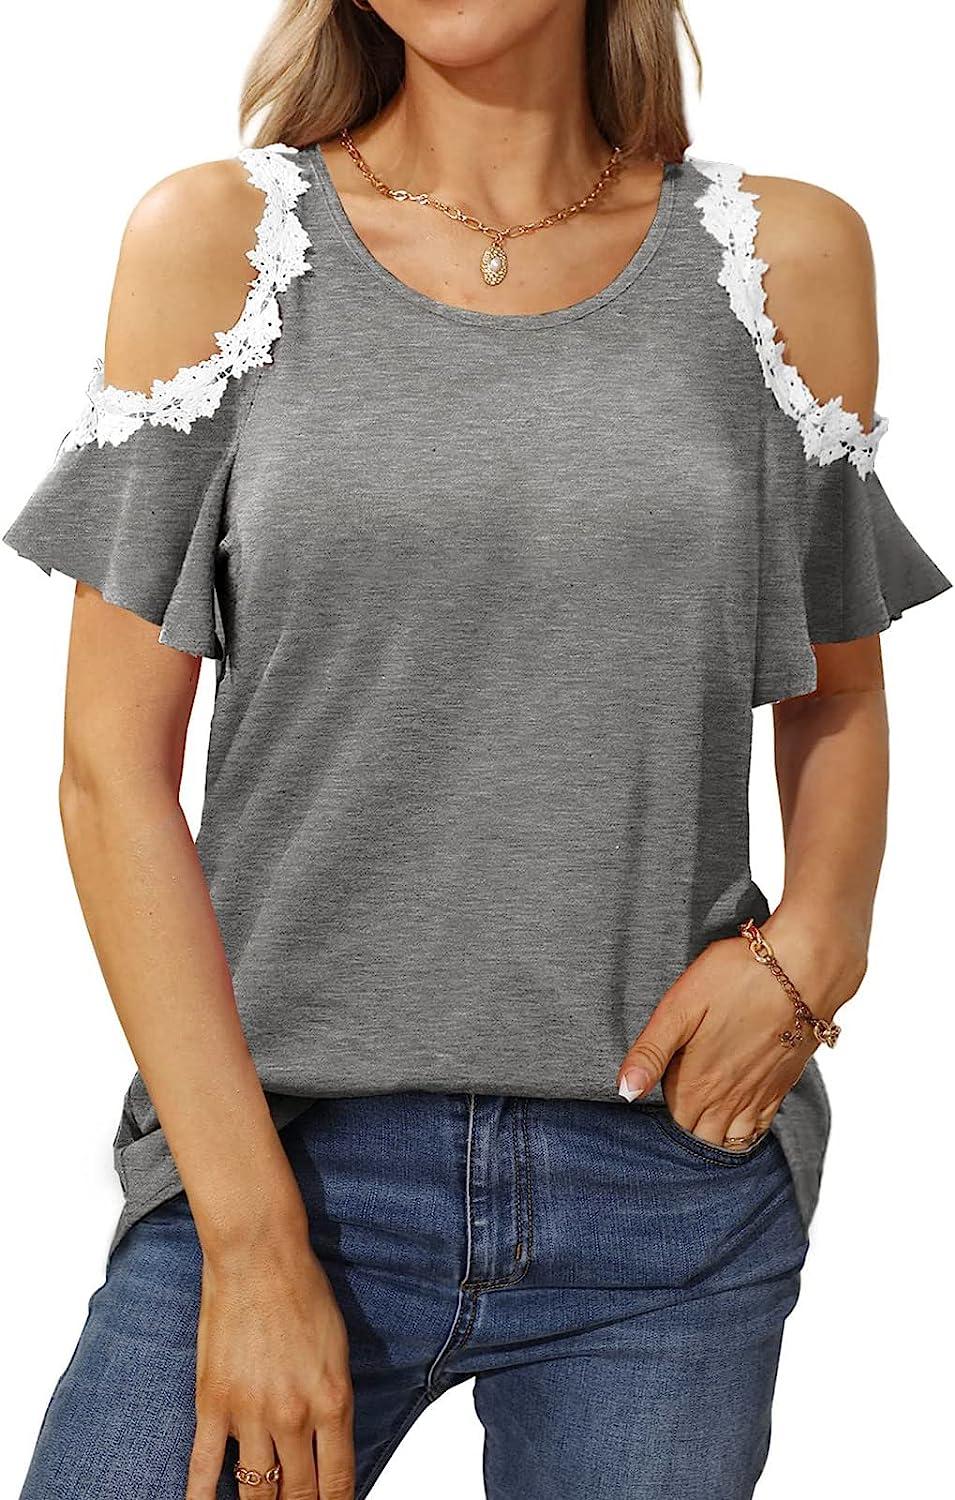  Plus Size Tops for Women, Cold Shoulder Summer T Shirt